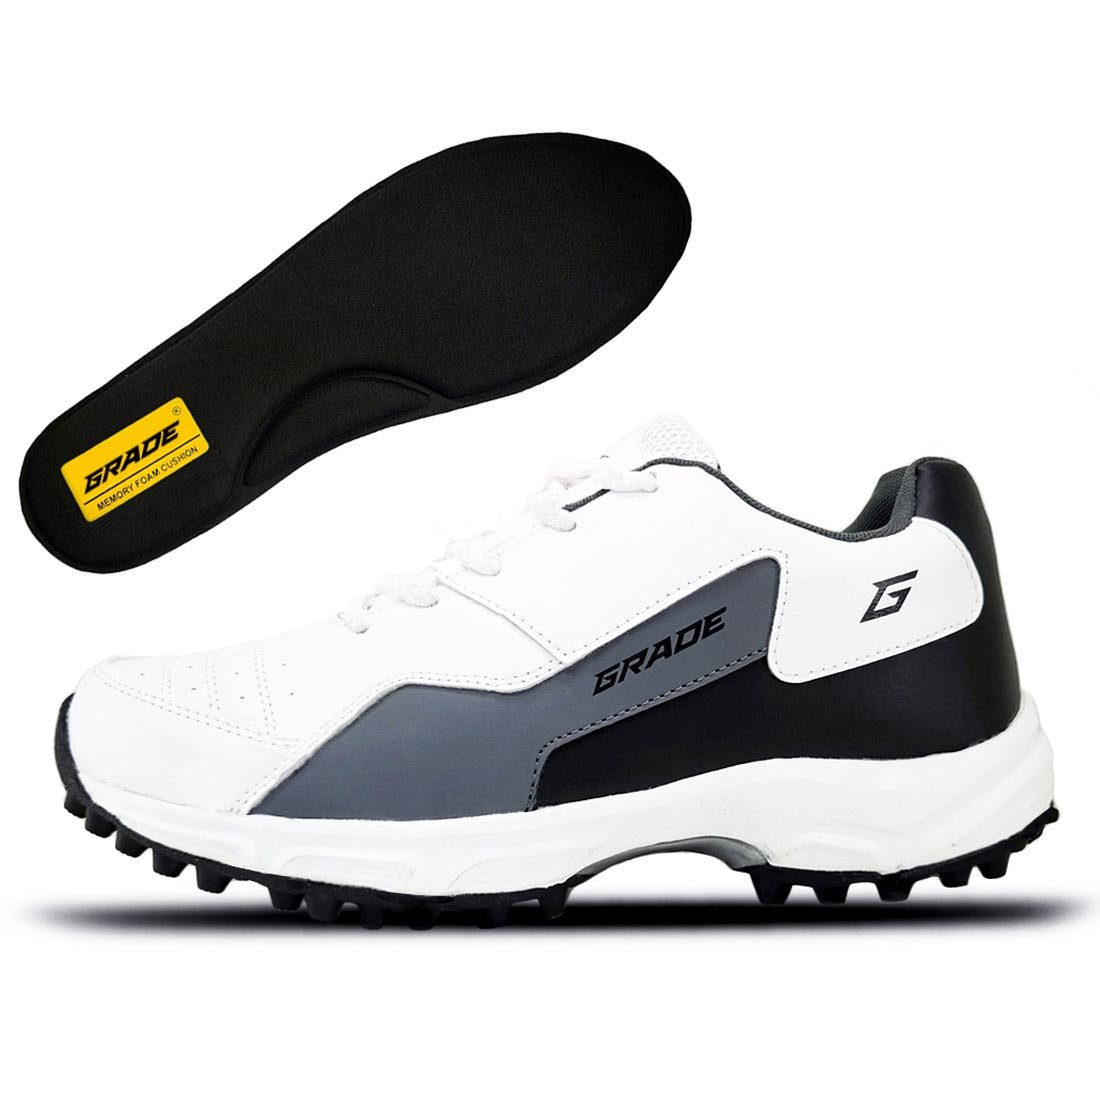 https://gradefootwear.com/wp-content/uploads/2021/03/Straight-Drive-Cricket-Shoes-Black-1.jpg